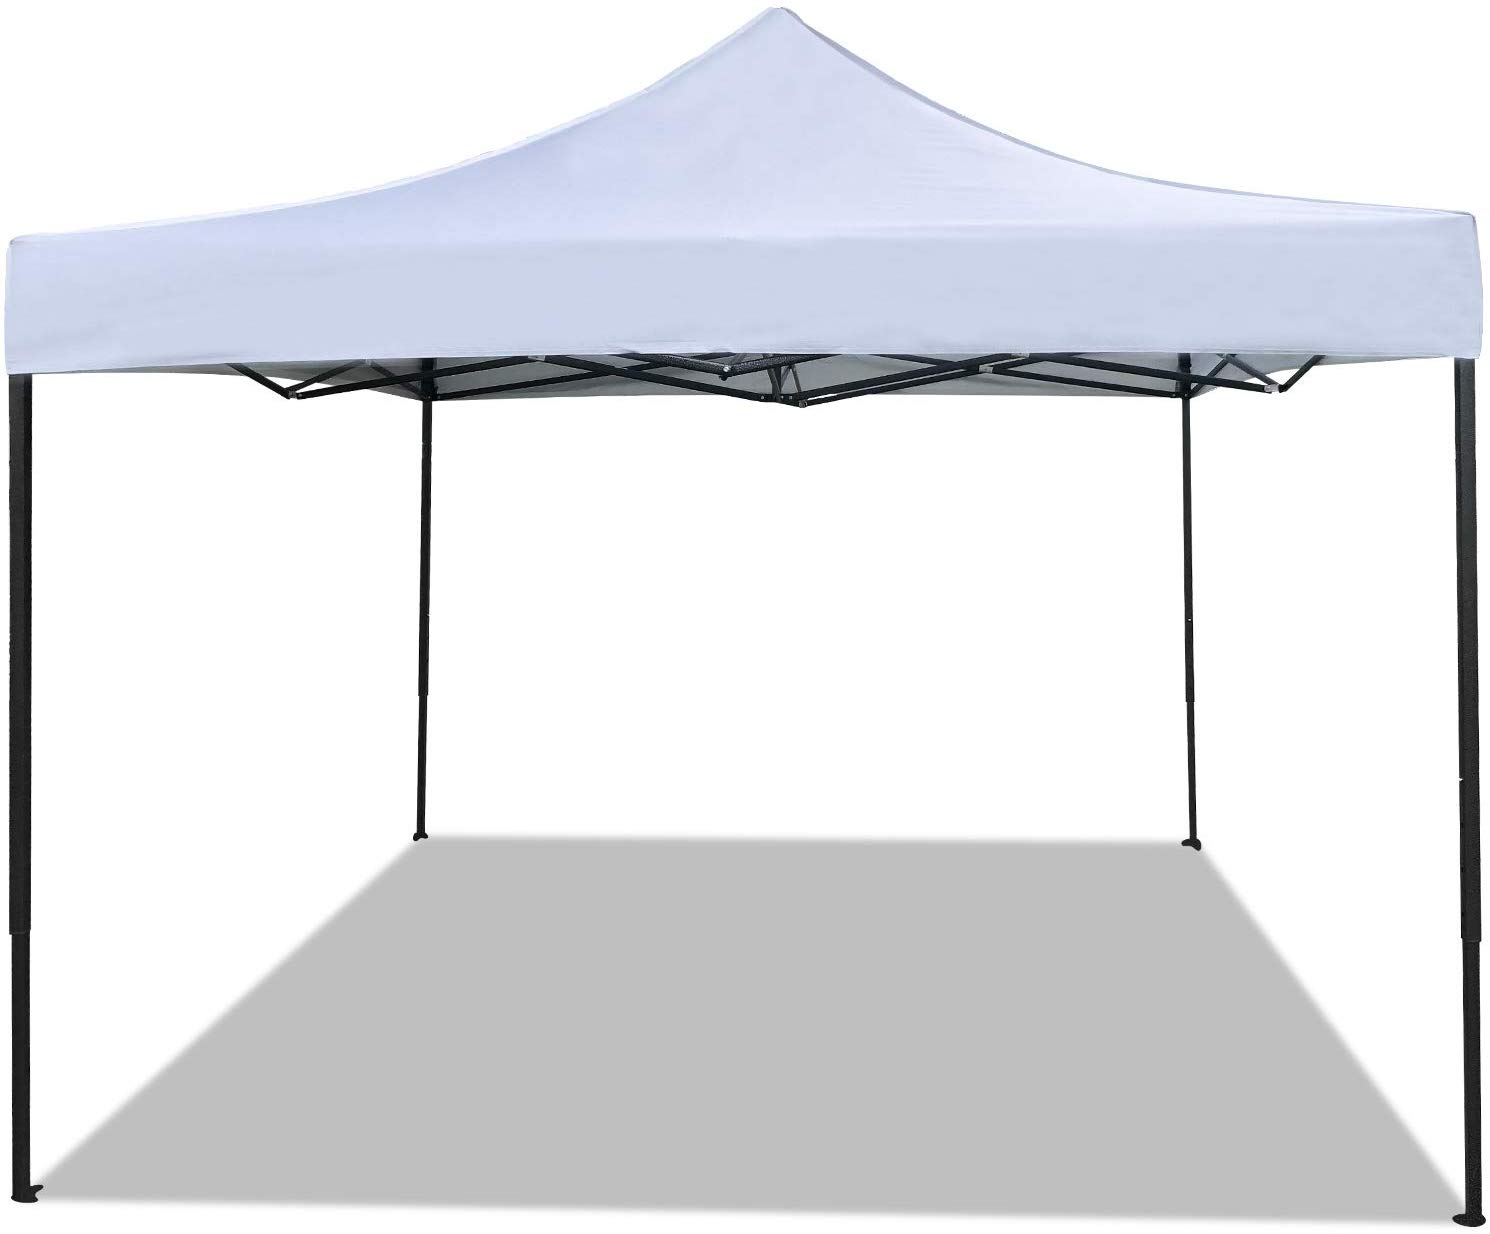 FDW Pop Up Canopy 10x20 pop up Canopy Tent Folding Protable Ez up Canopy Party 